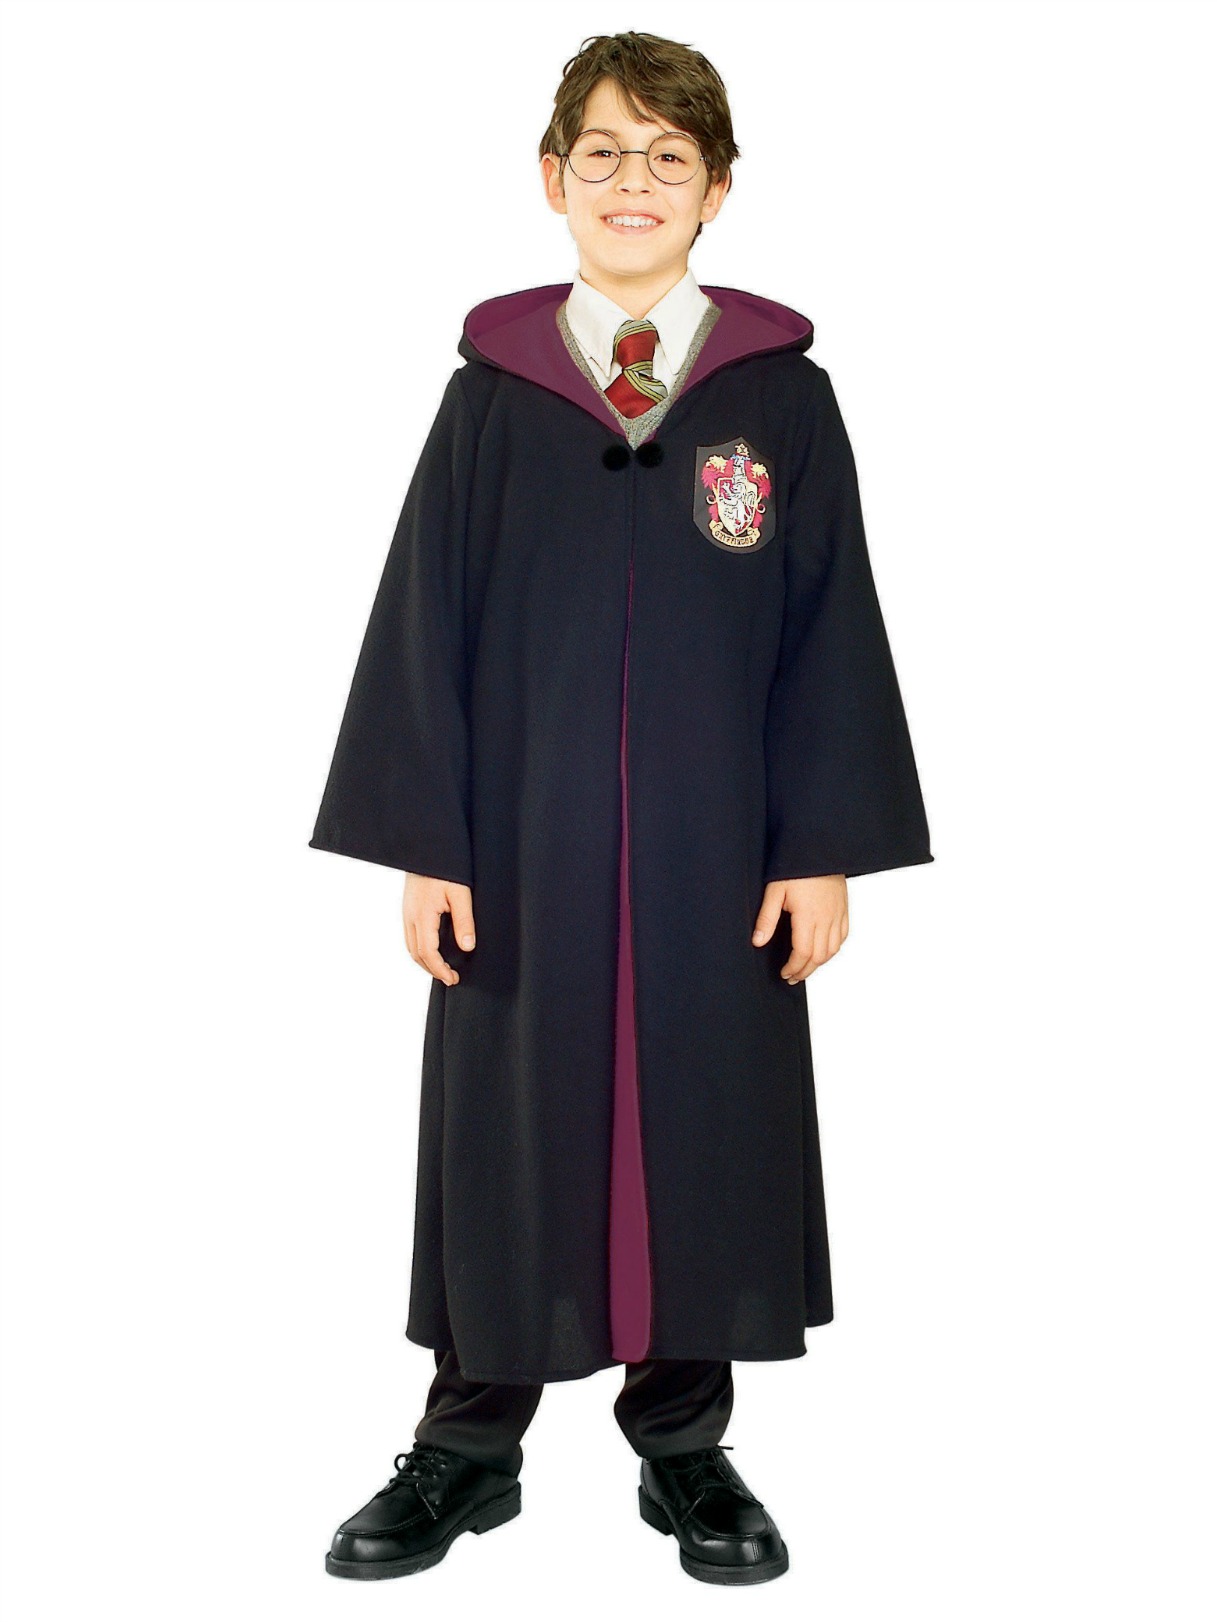 Harry Potter Robe Boys Deluxe Costume